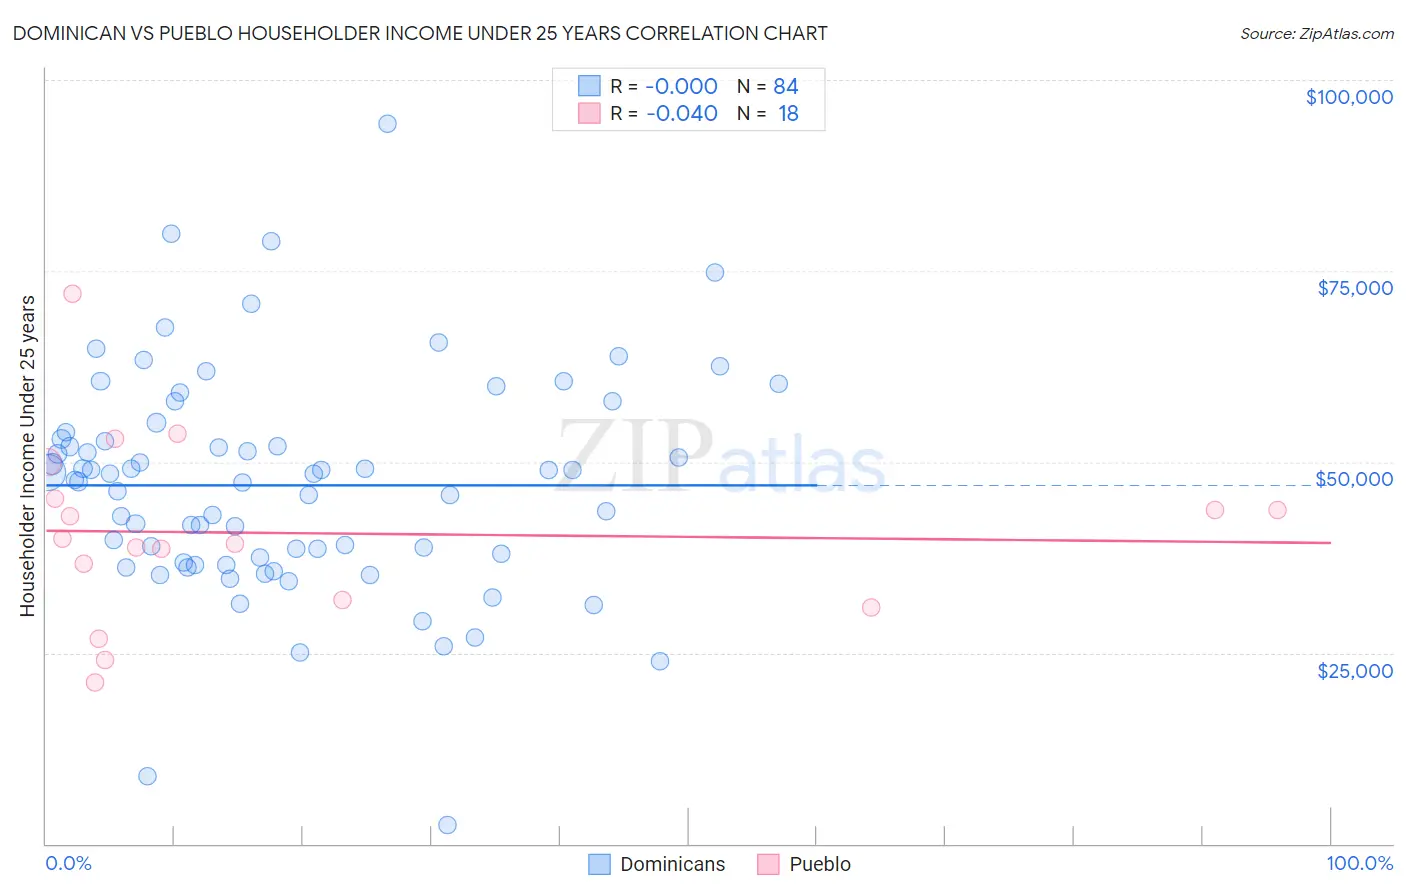 Dominican vs Pueblo Householder Income Under 25 years